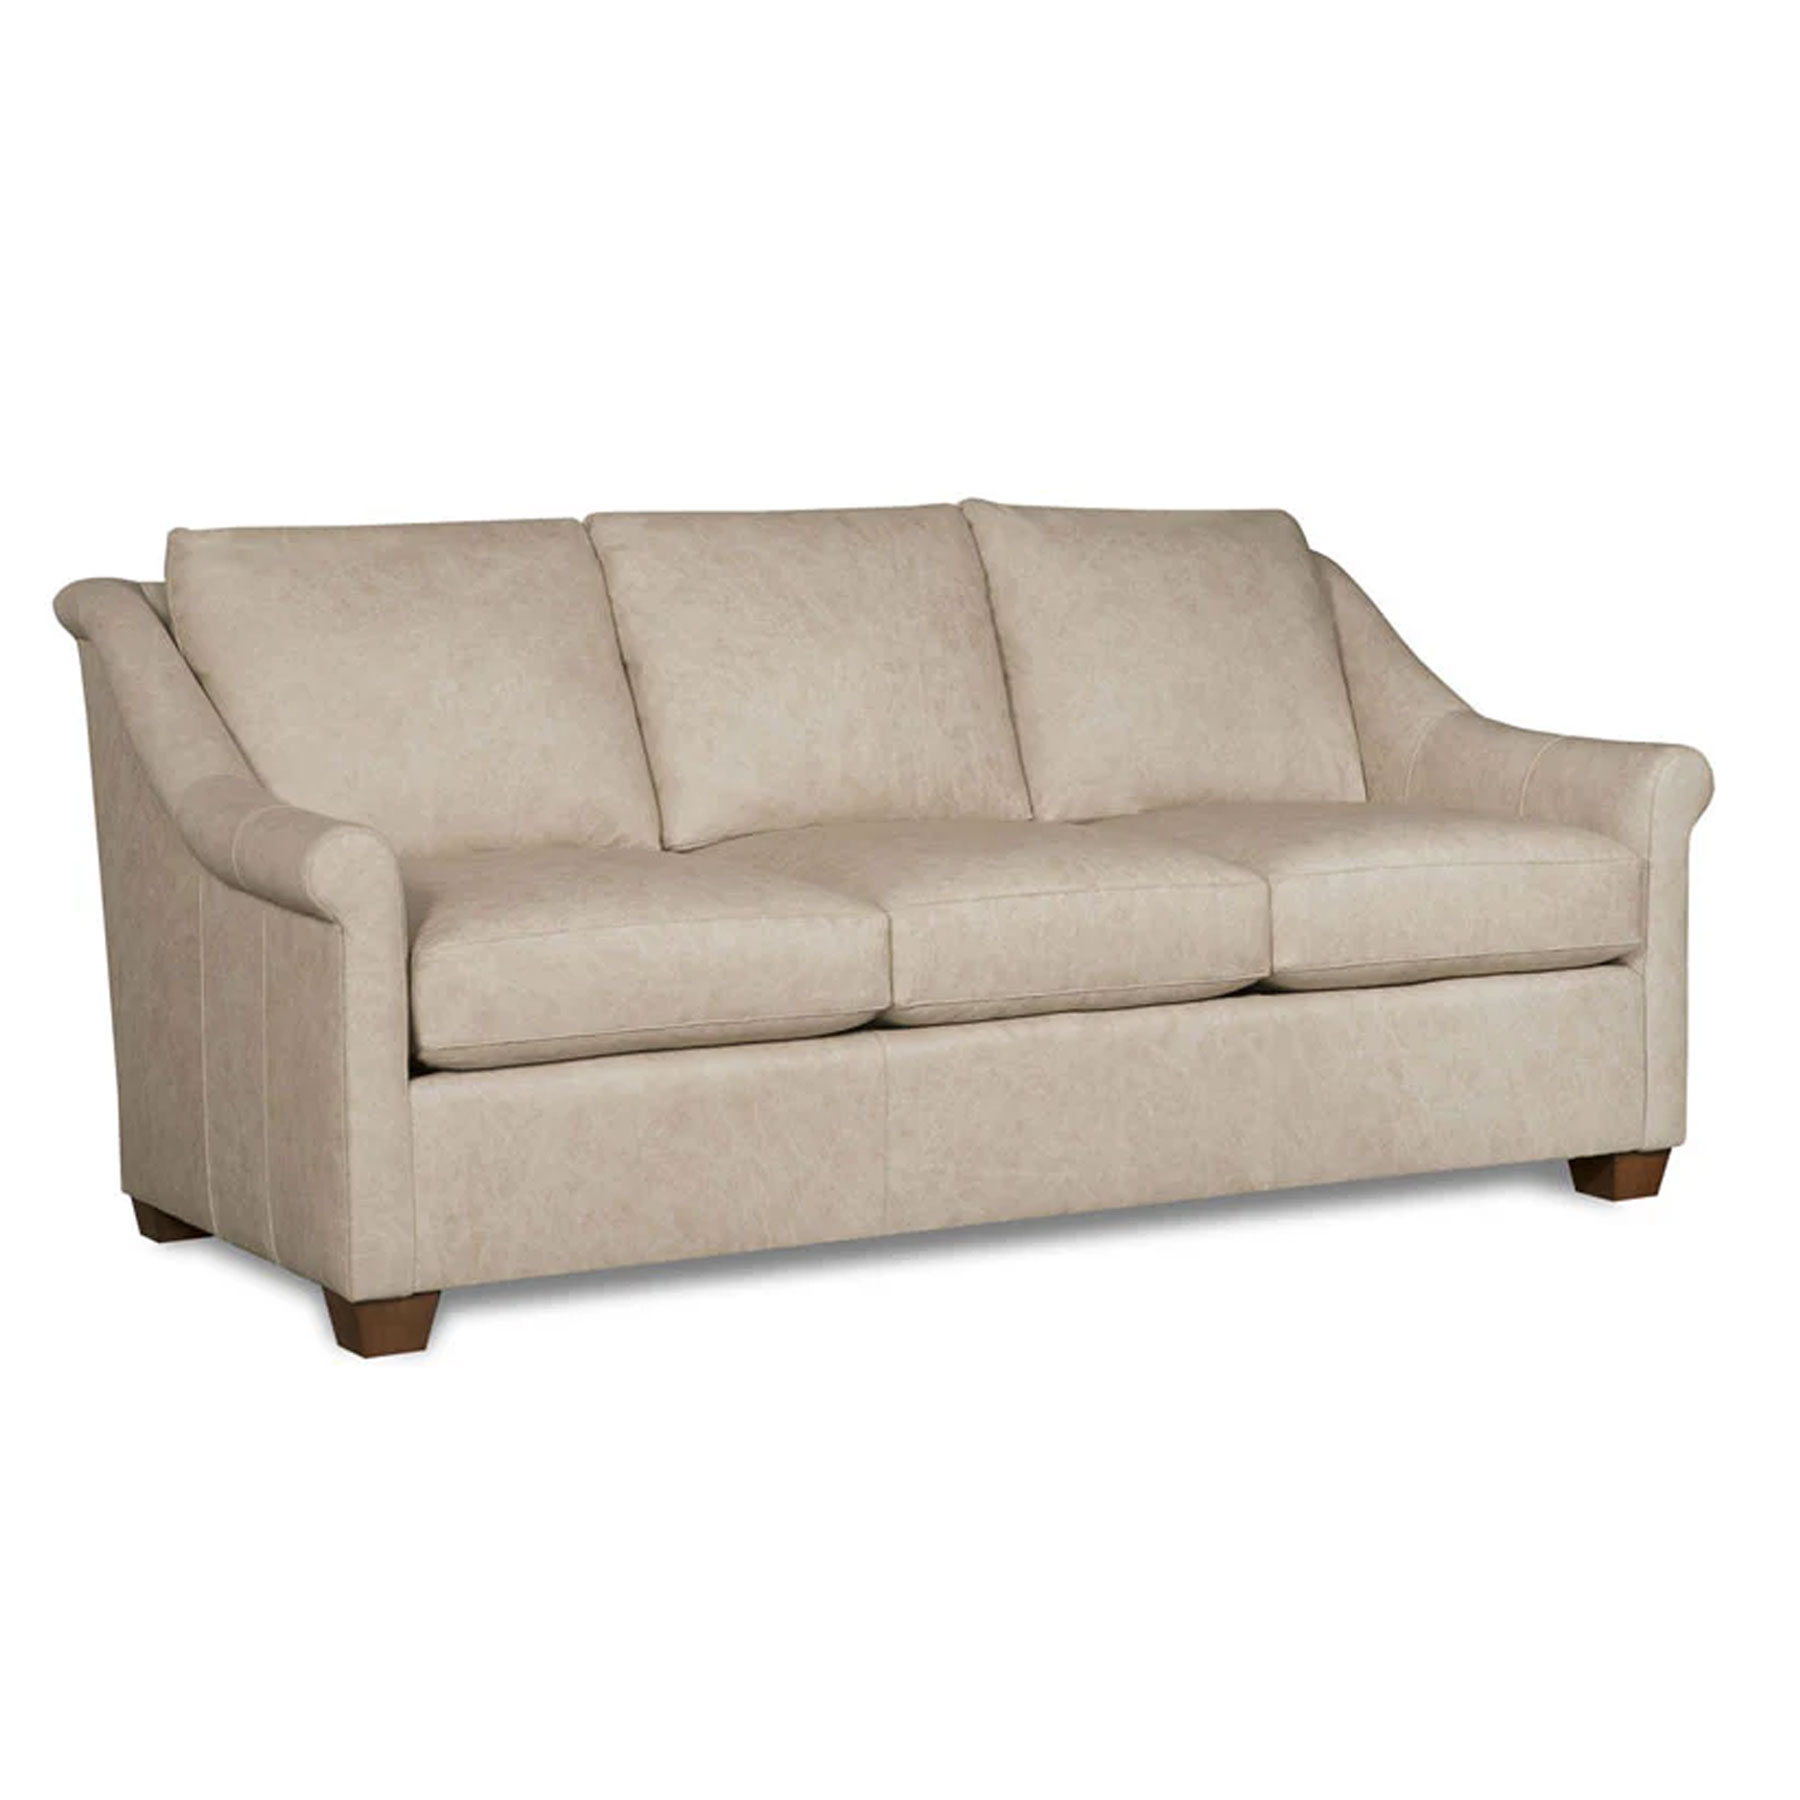 McKinley Leather 4334 Tomason Sofa in Renaldi Flint Rock Leather